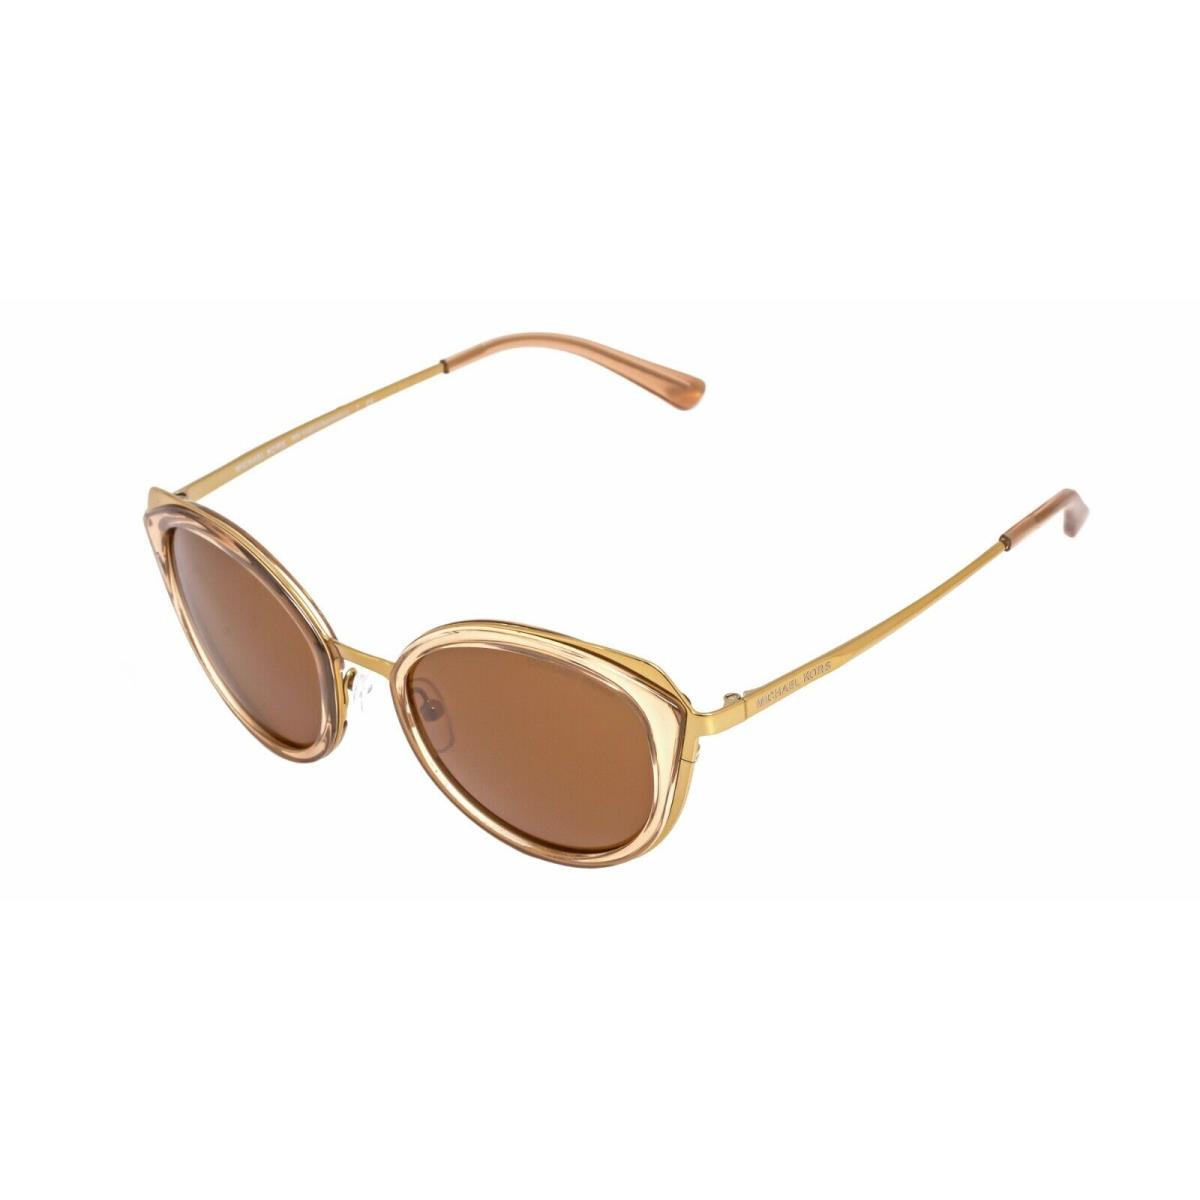 Michael Kors Charleston MK1029-116873-52 Gold Translucent Brown Sunglasses - Frame: Gold, Lens: Brown